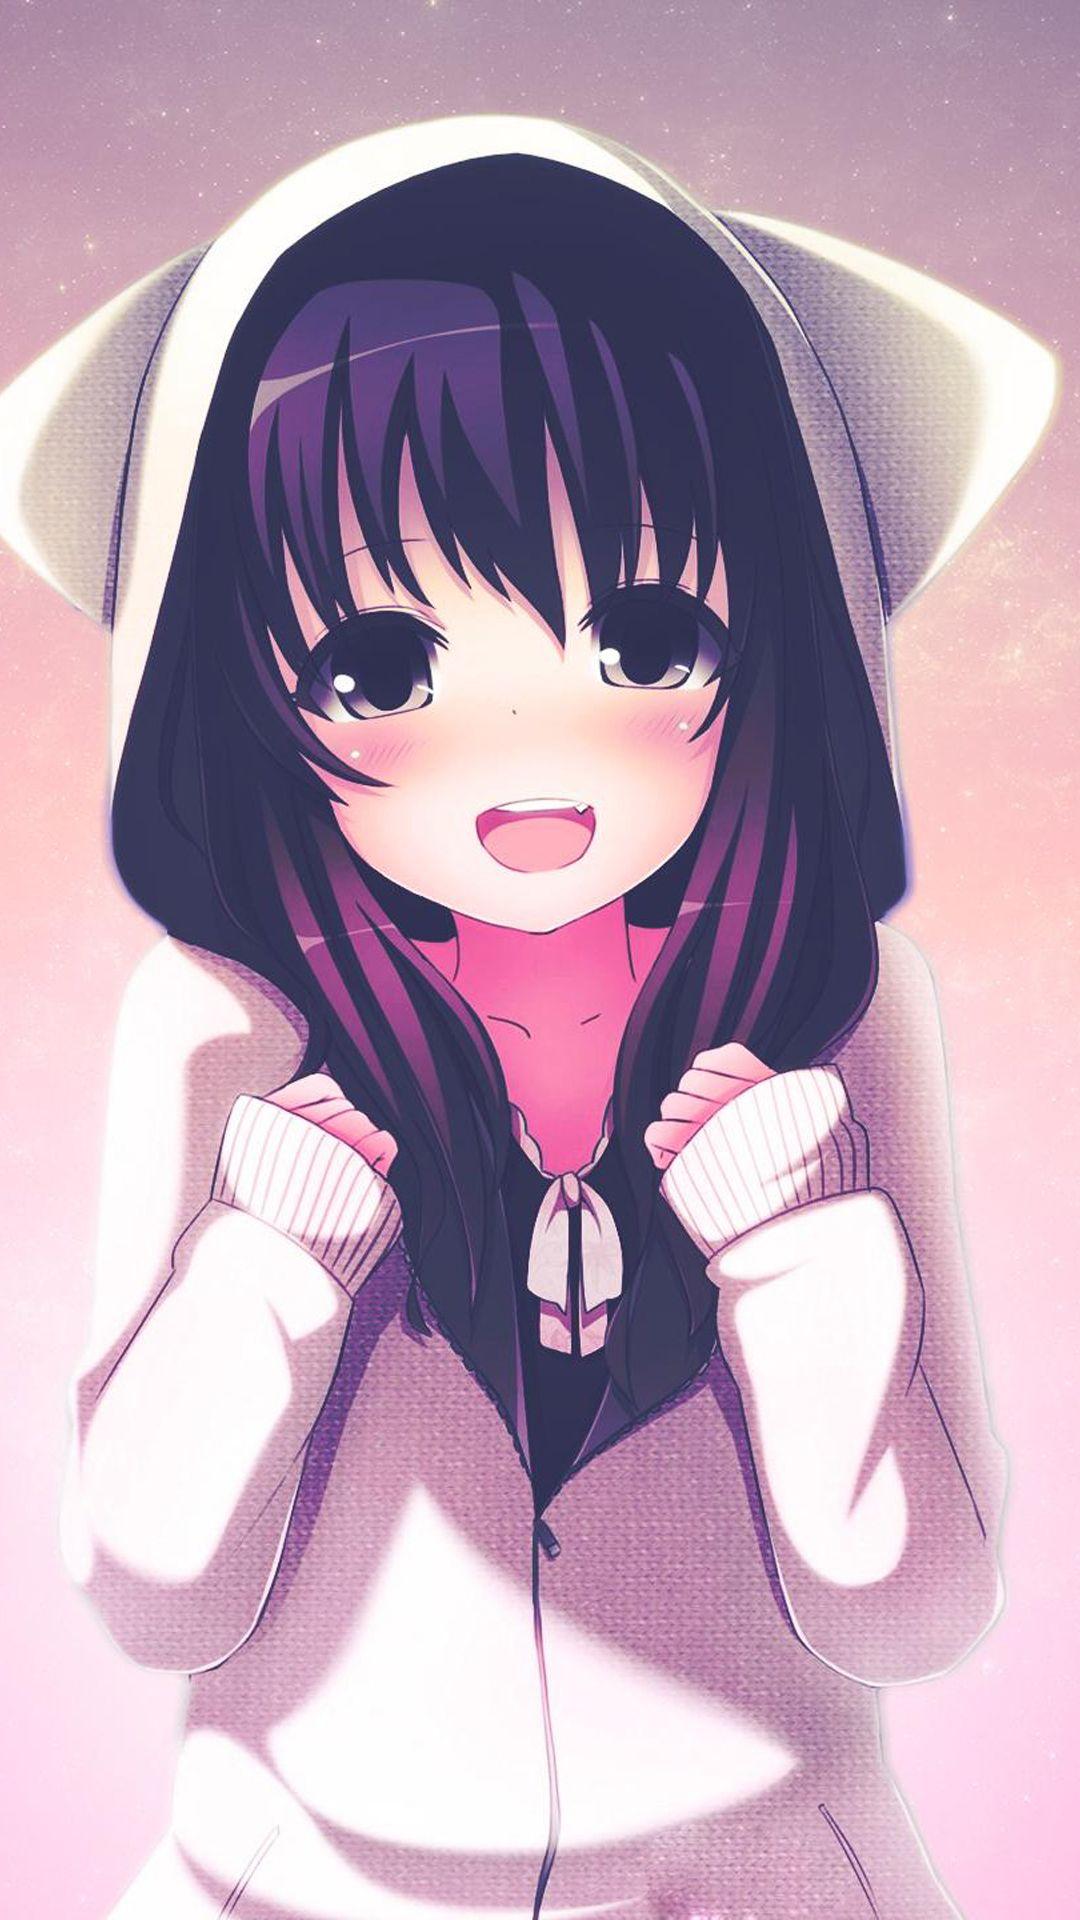 Cute Anime Girl Iphone Wallpaper Hd gambar ke 3